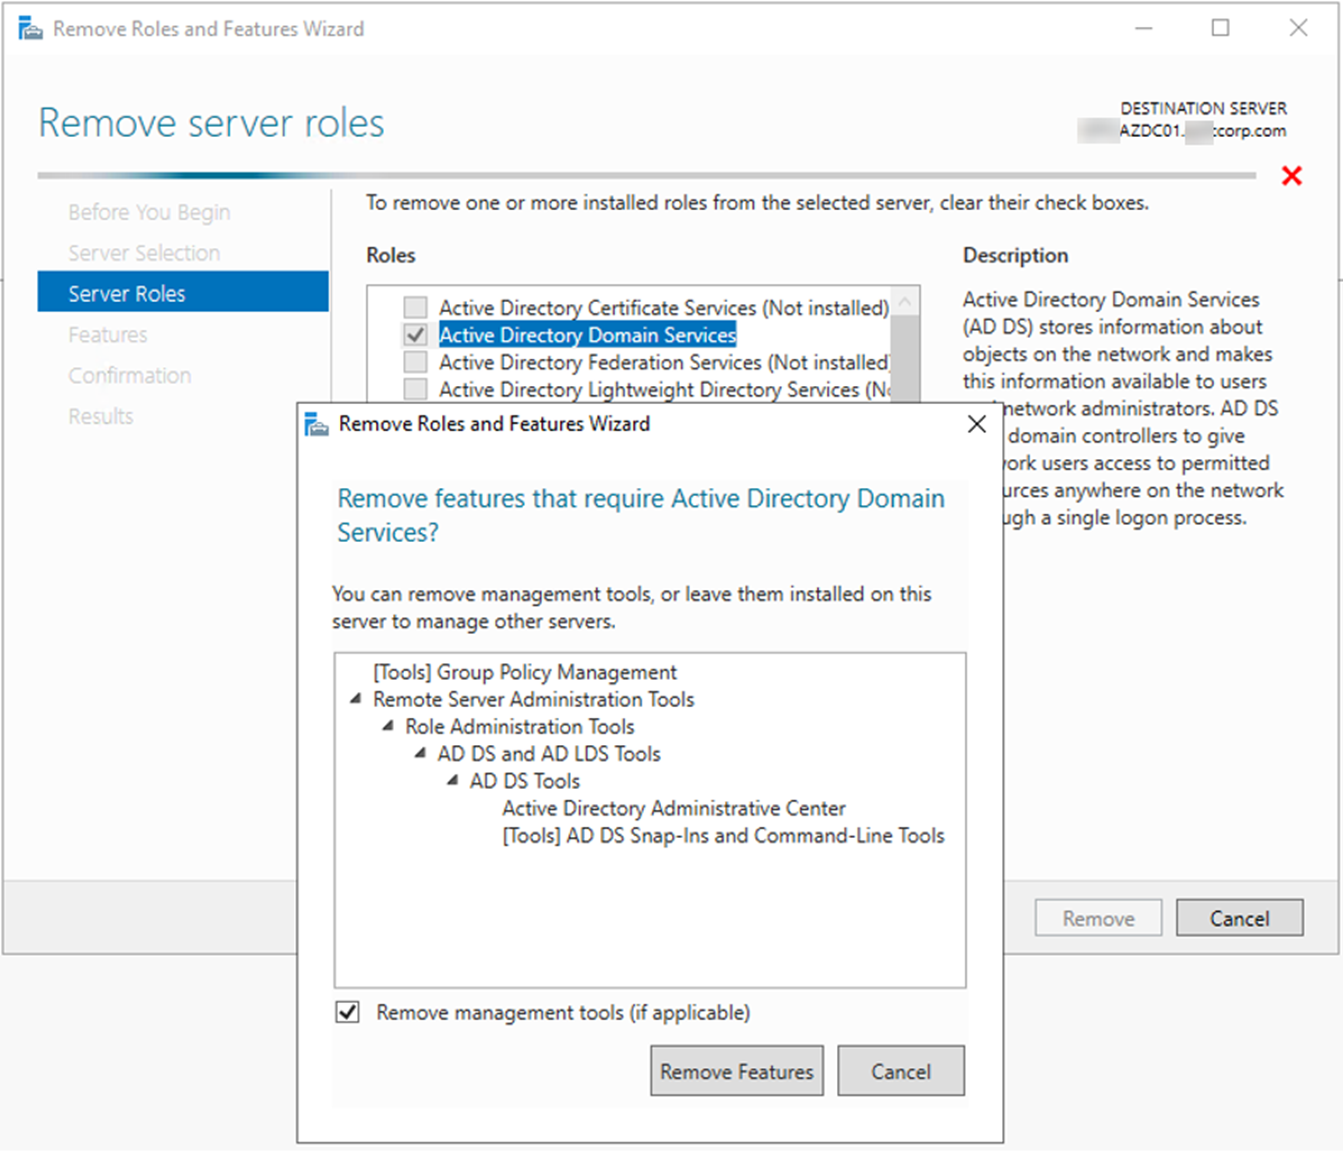 101120 0520 HowtoDemote10 - How to Demote Microsoft Windows Server 2019 Domain Controller Virtual Machine at Azure